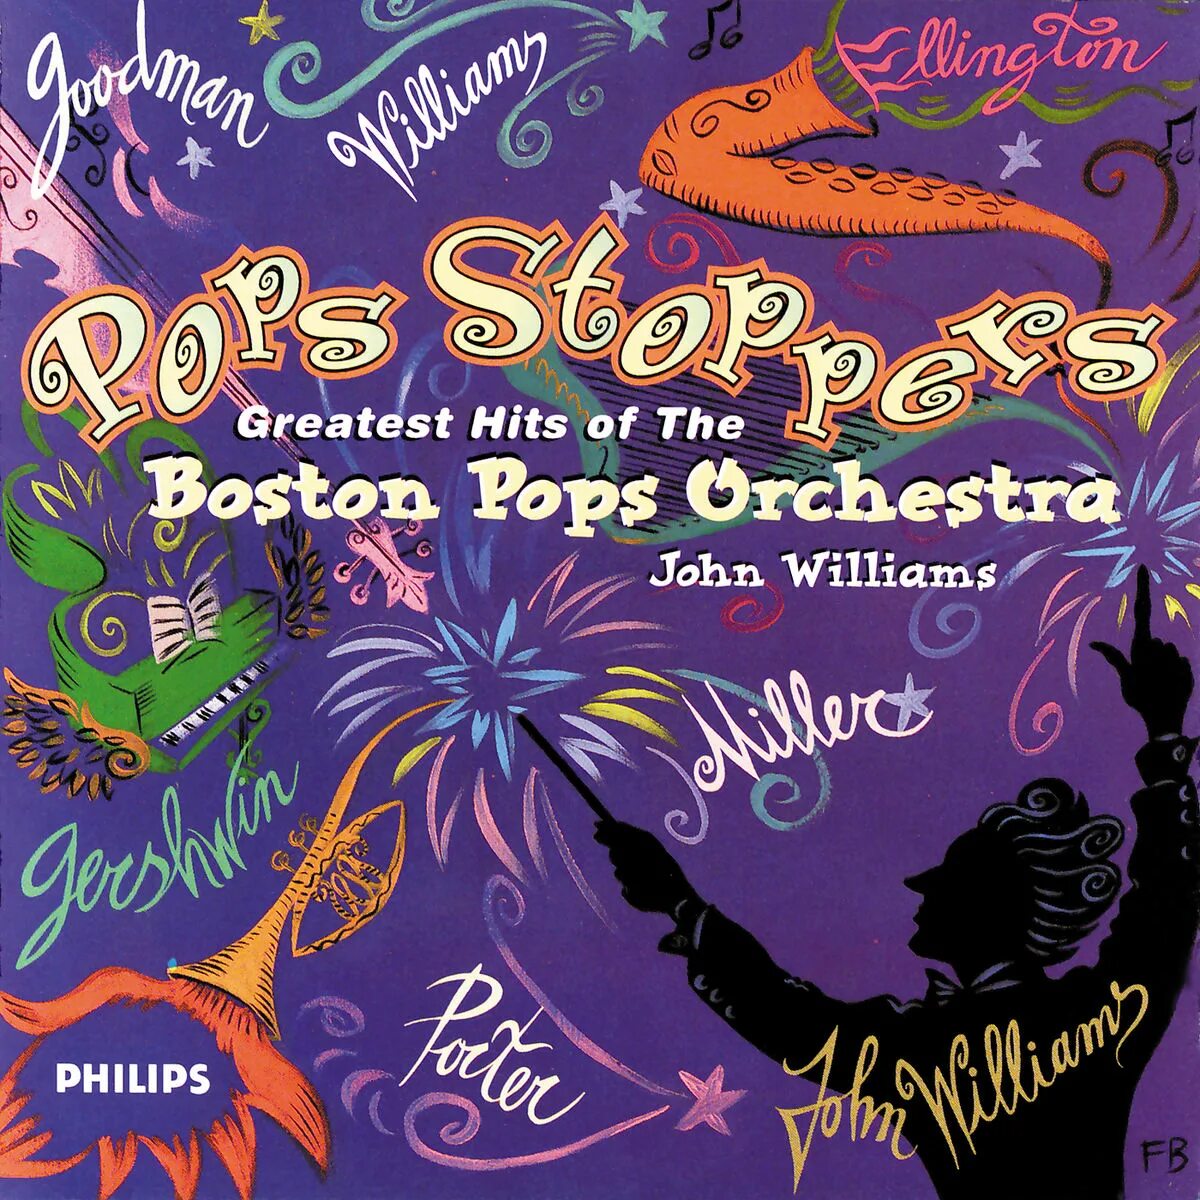 Boston Pops Orchestra. Джон Уильямс the Boston Pops Orchestra. CD John Williams and Boston Pops. Main title John Towner Williams, the Boston Pops Orchestra.